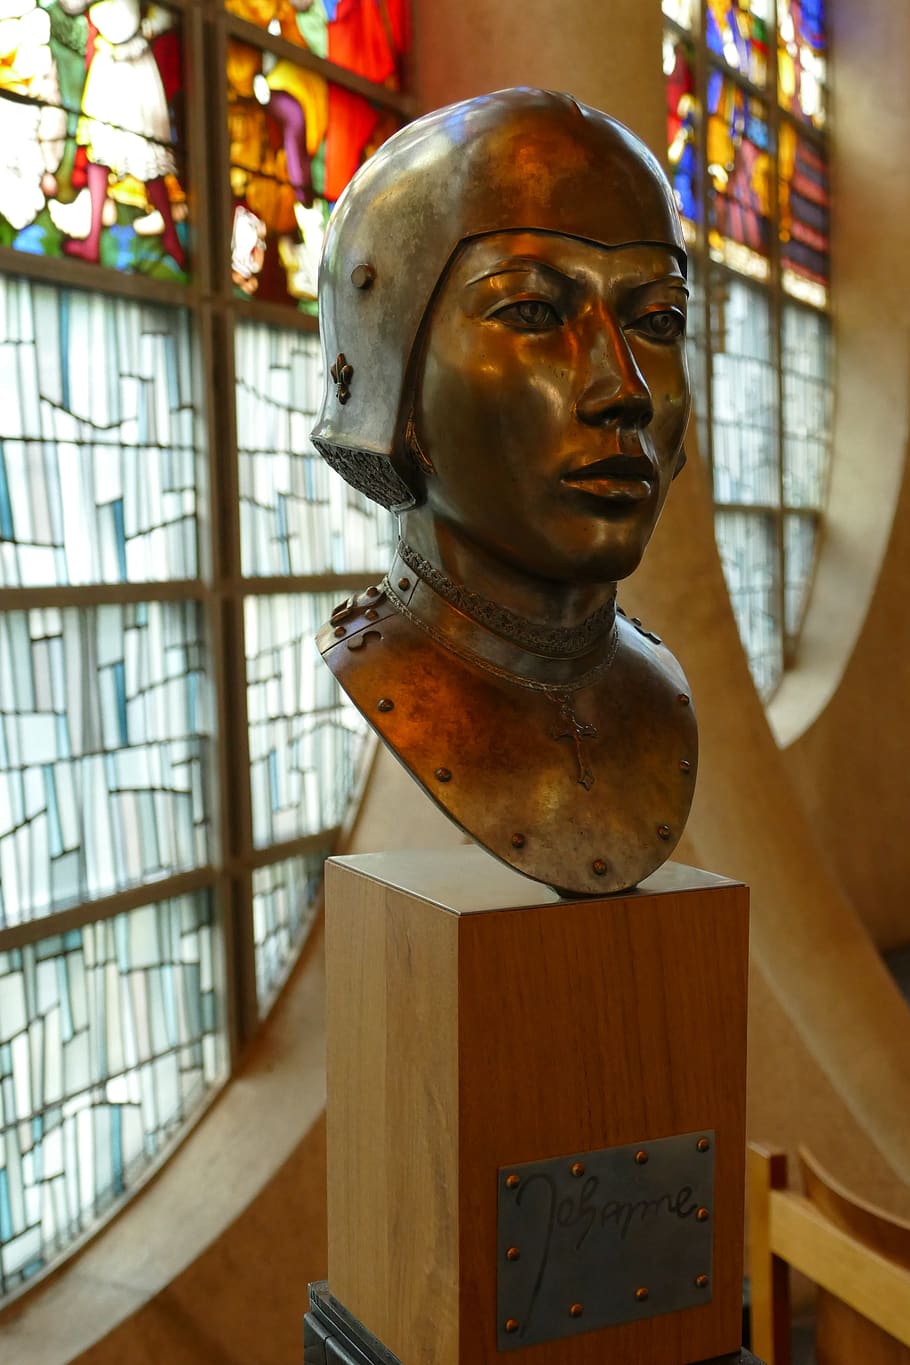 jeanne d'arc, cabeça, bronze, imagem, escultura, igreja, rouen, frança, santo, herói